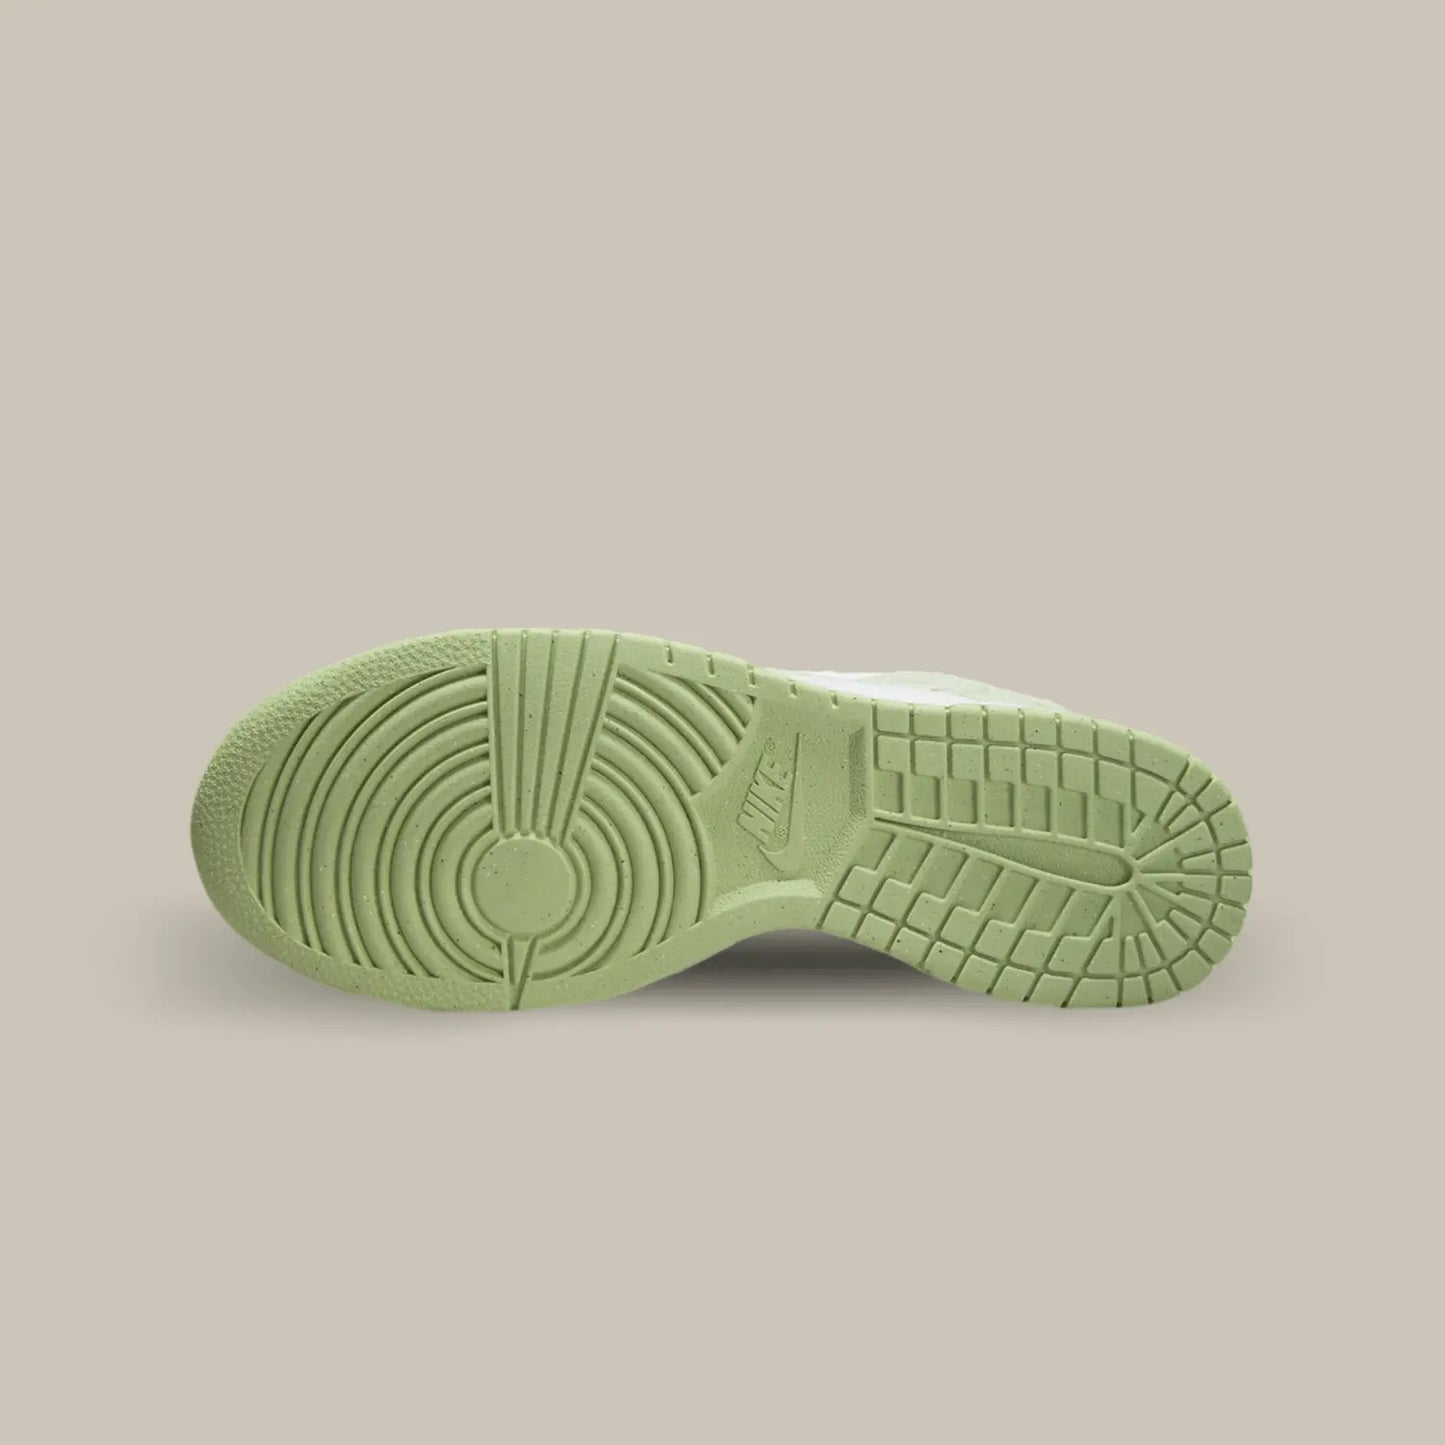 La semelle de la Nike Dunk Low SE Fleece Green de couleur verte.